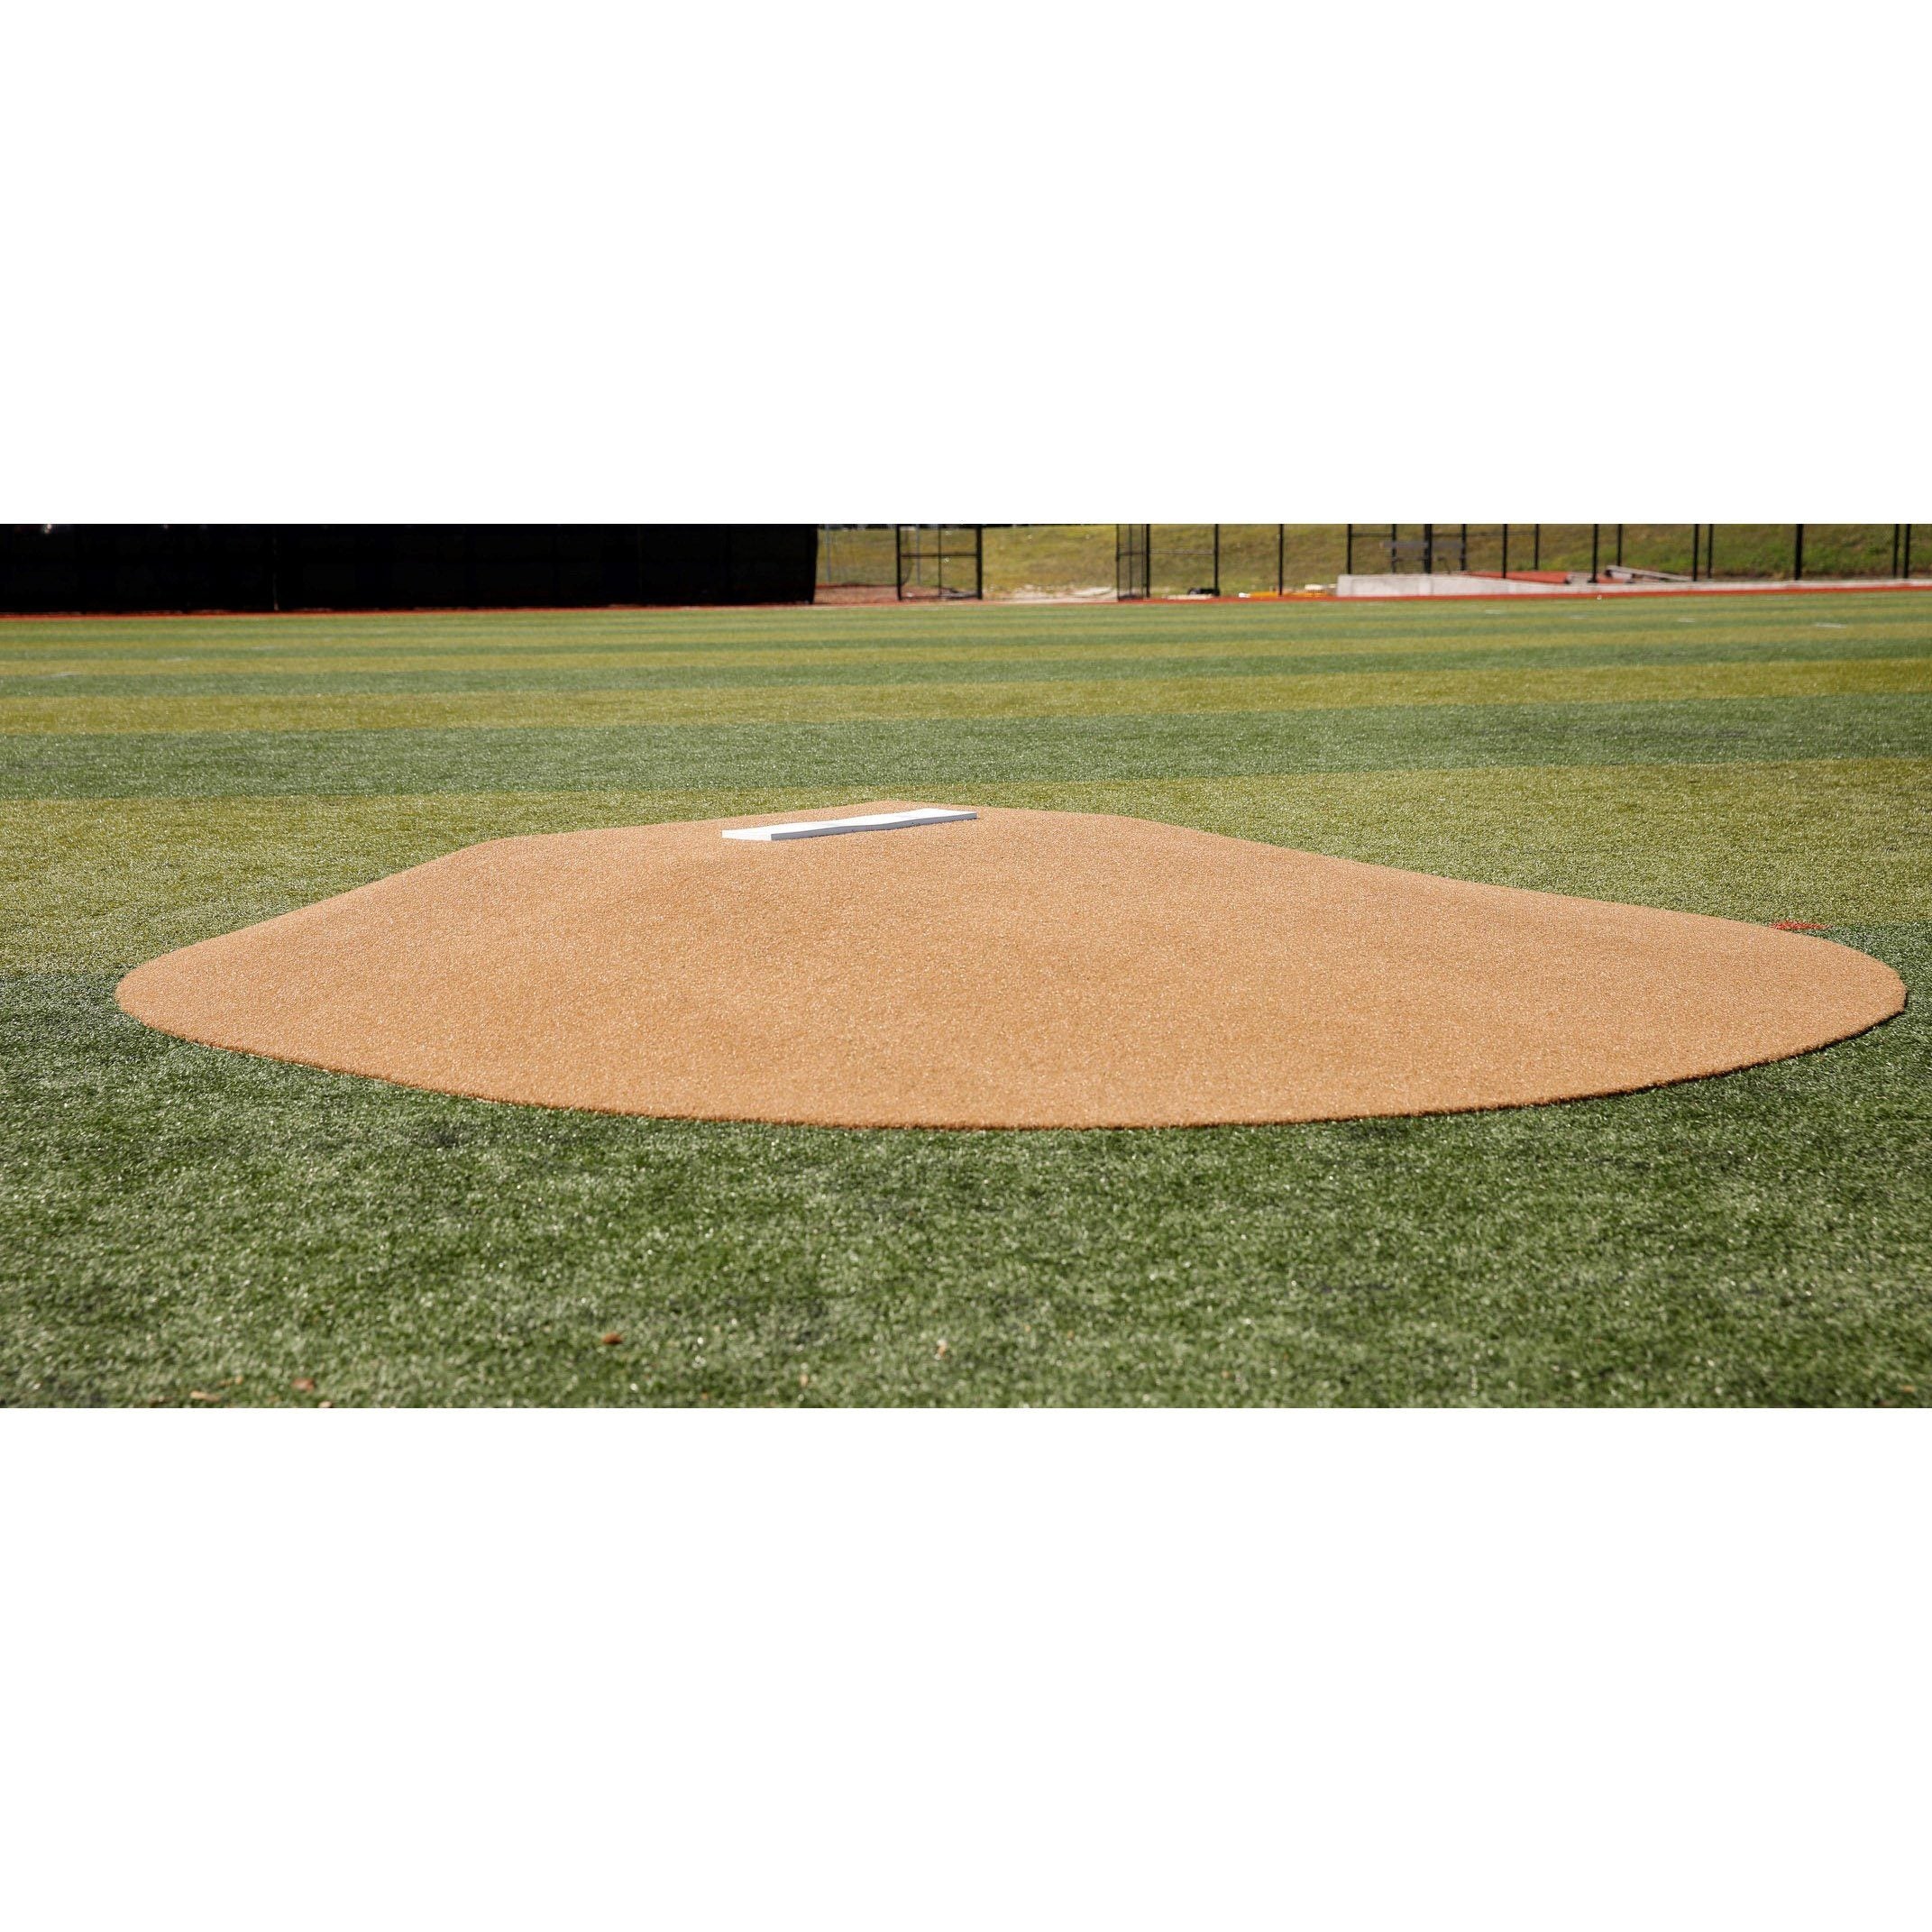 Arizona Mound Company 8" Little League Portable Game Pitching Mound - Pitch Pro Direct